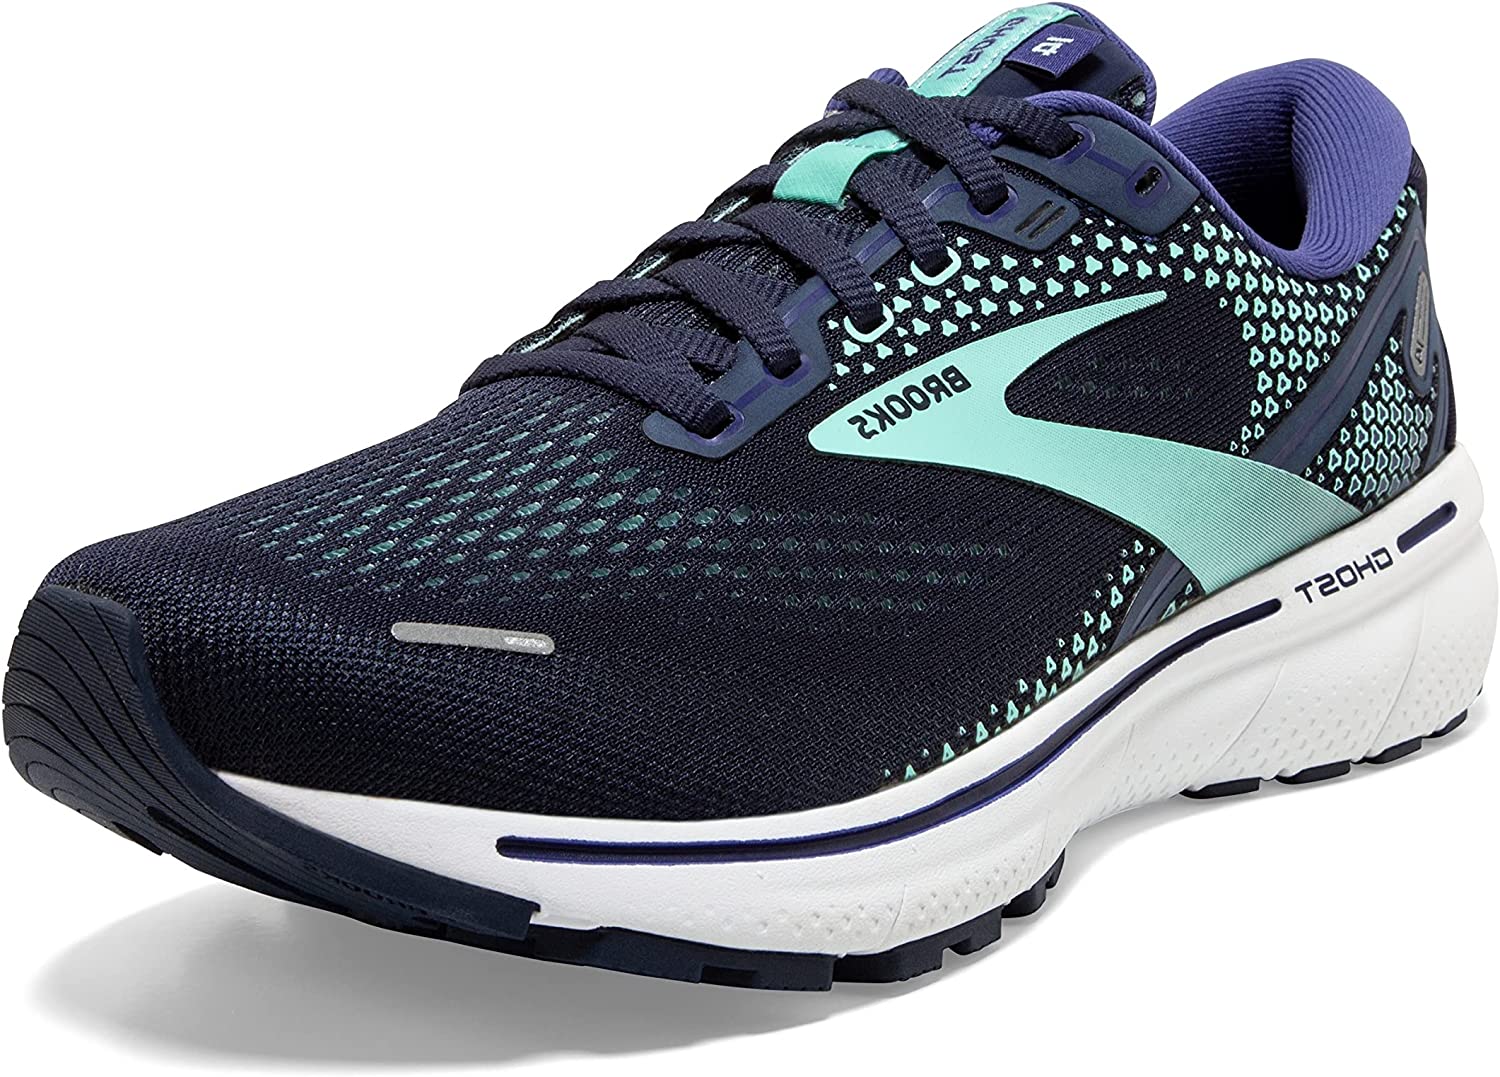 neutral shoes for marathon product review